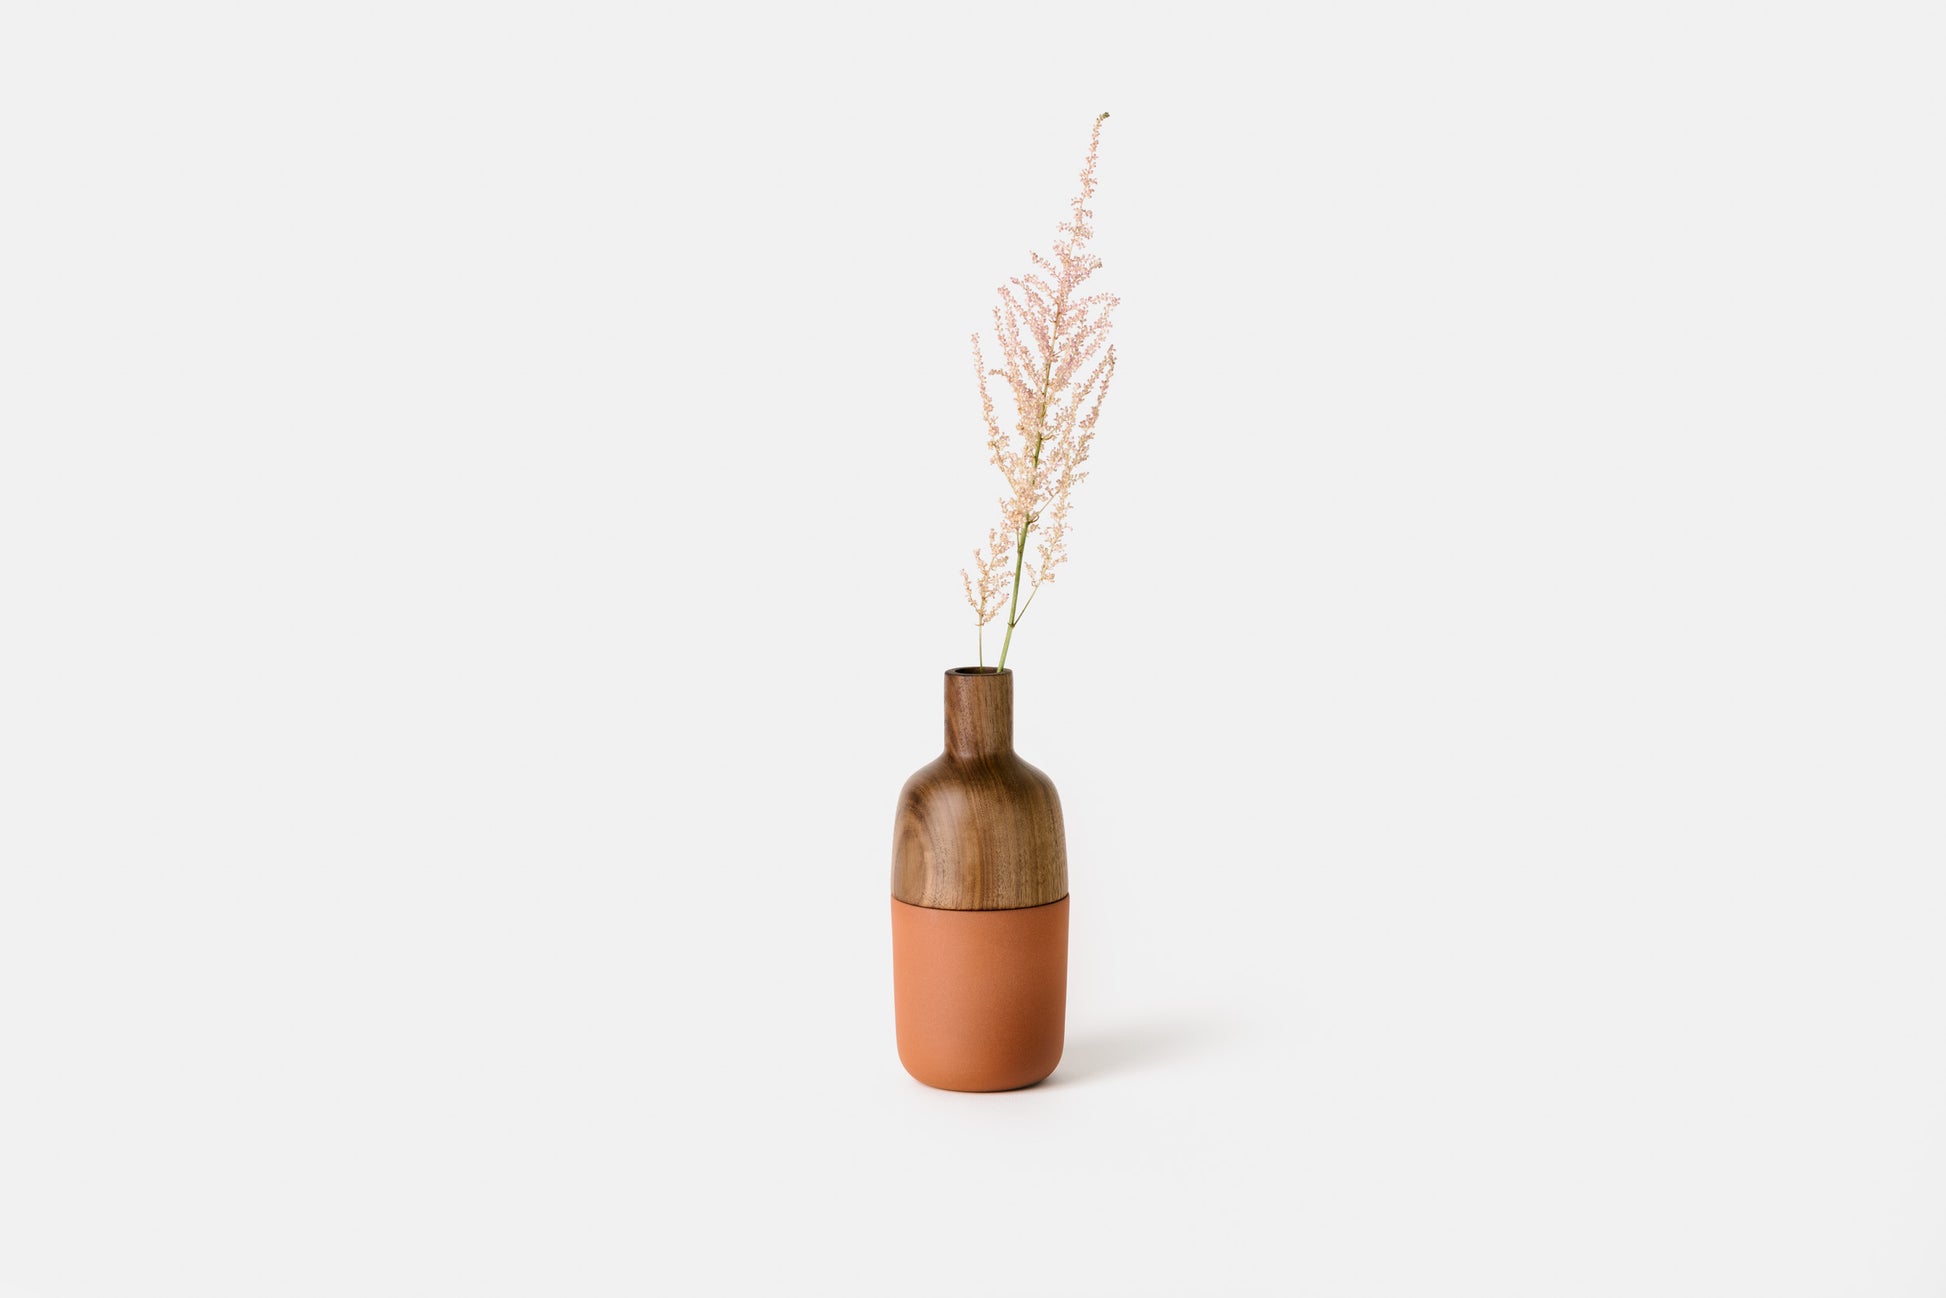 Walnut and terracotta marais vase by Melanie Abrantes Designs.